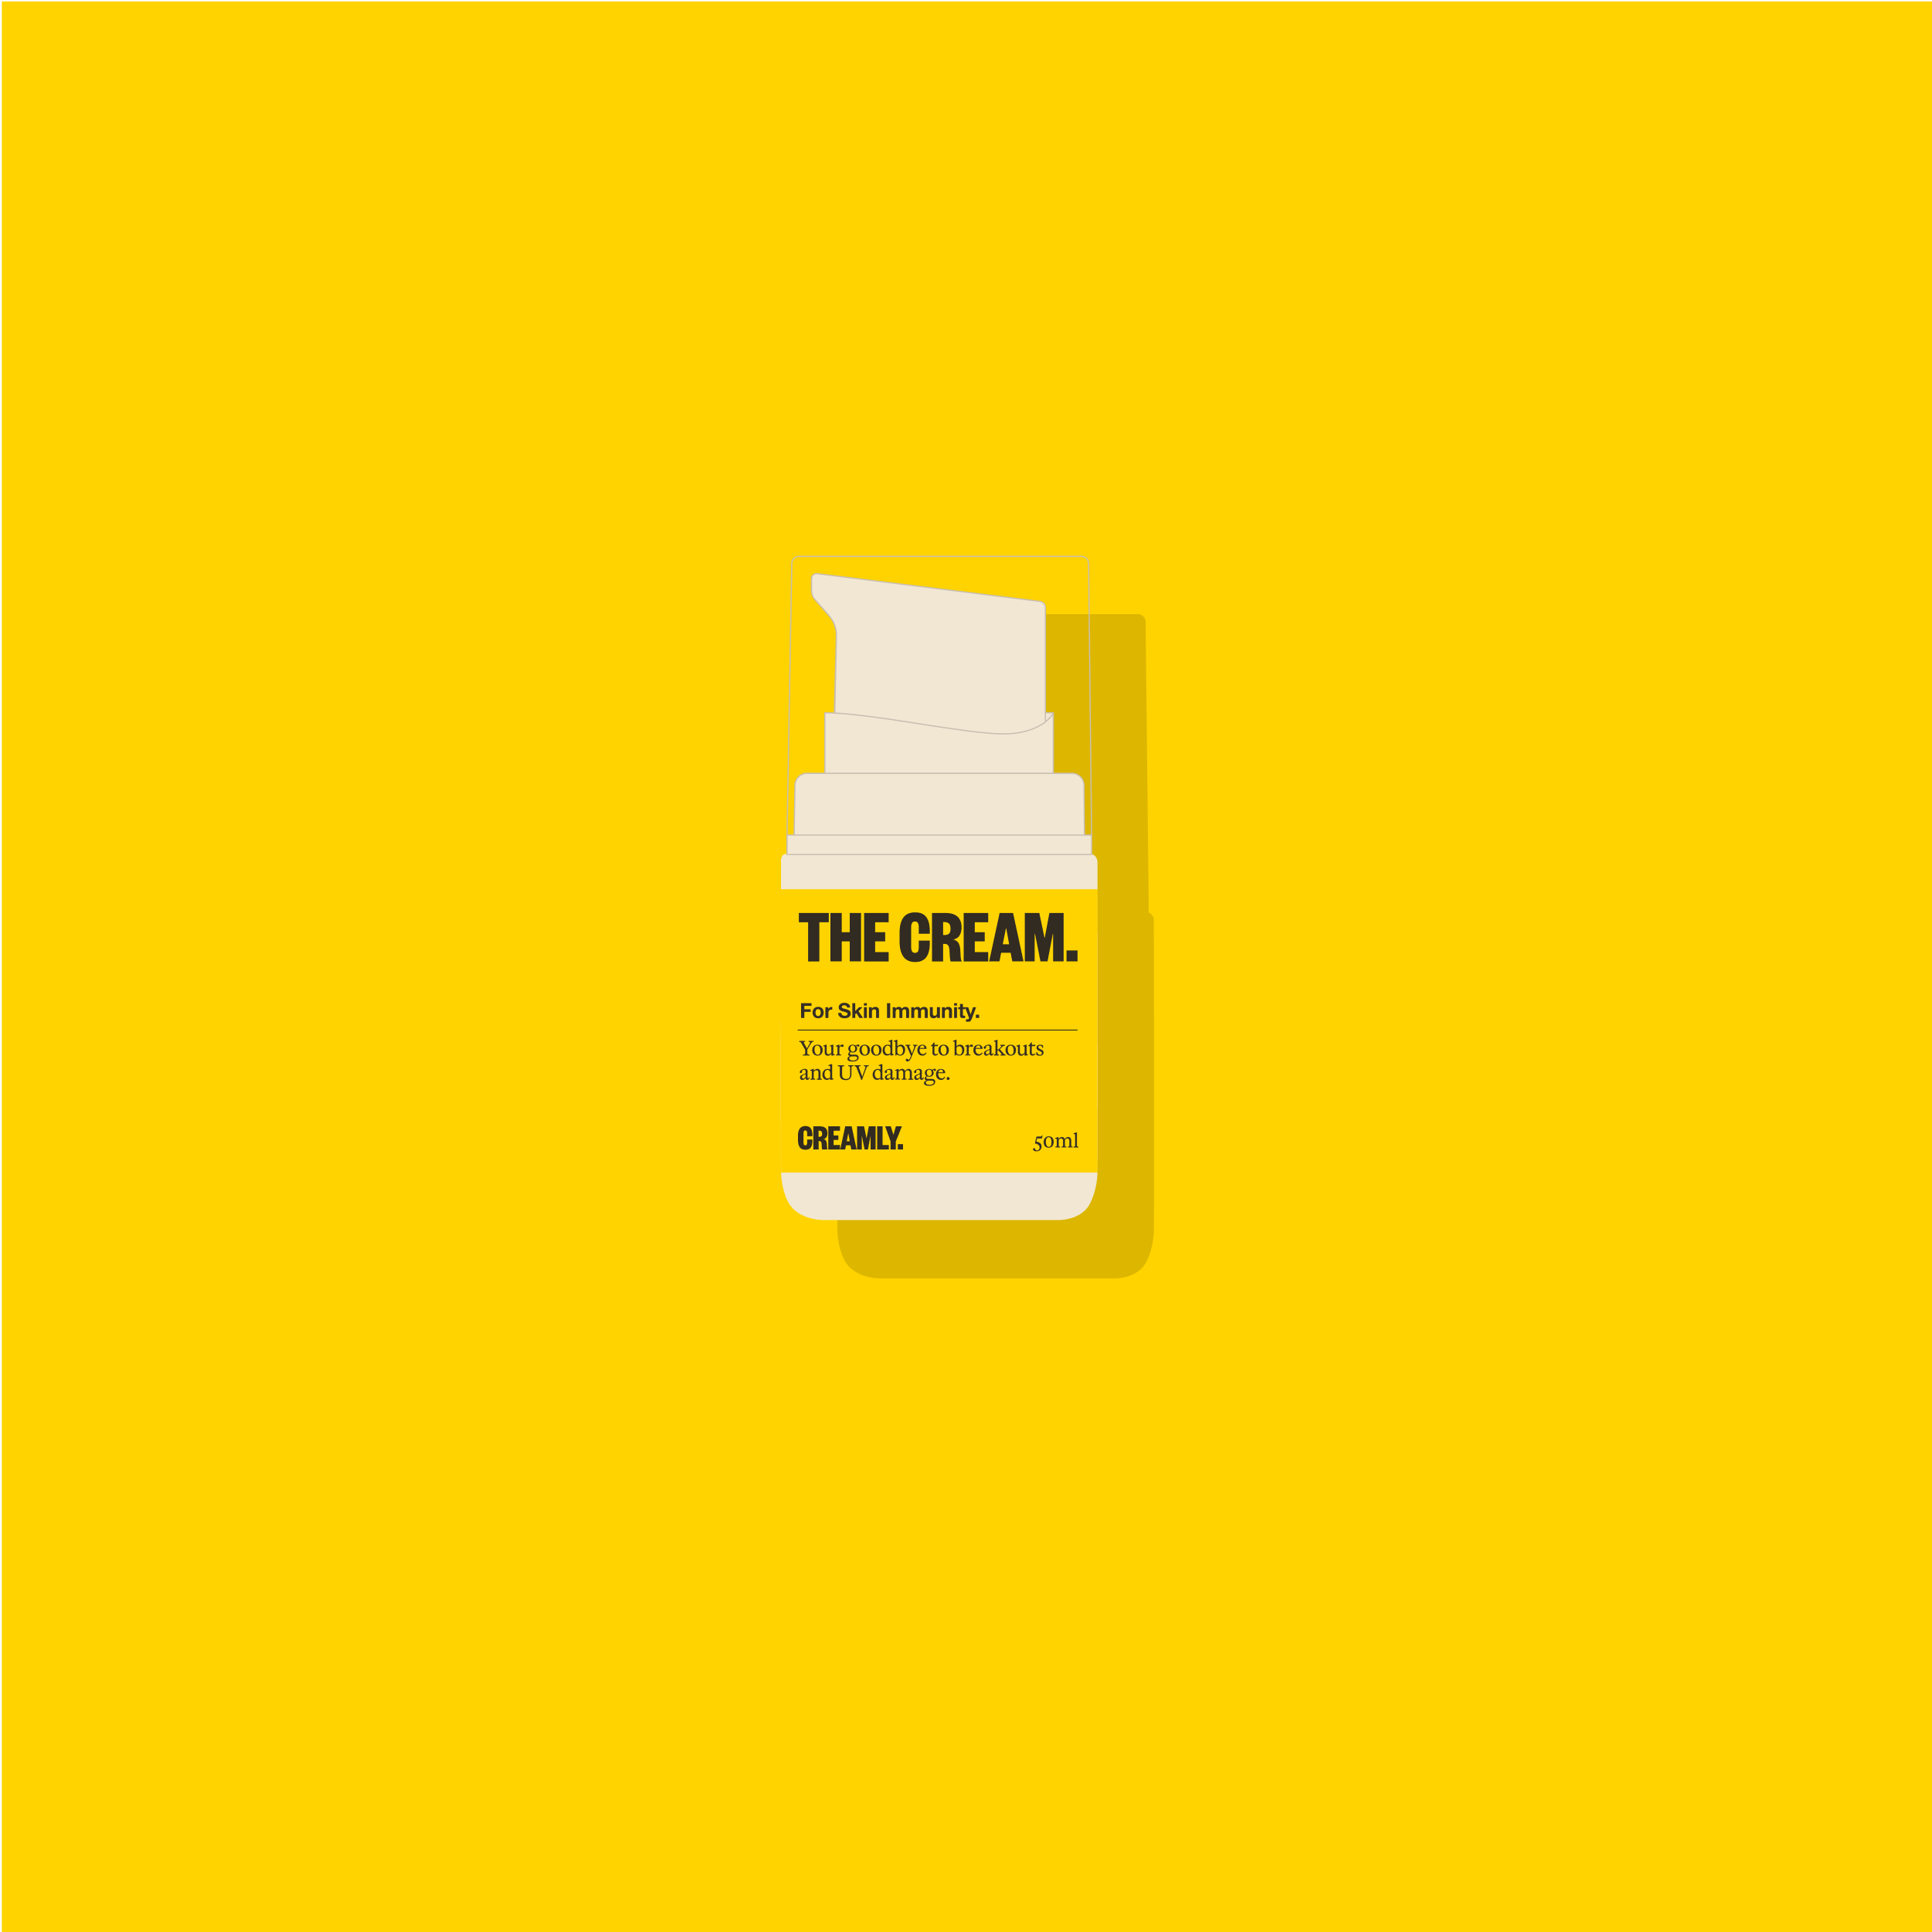 The Cream. For Skin Immunity.